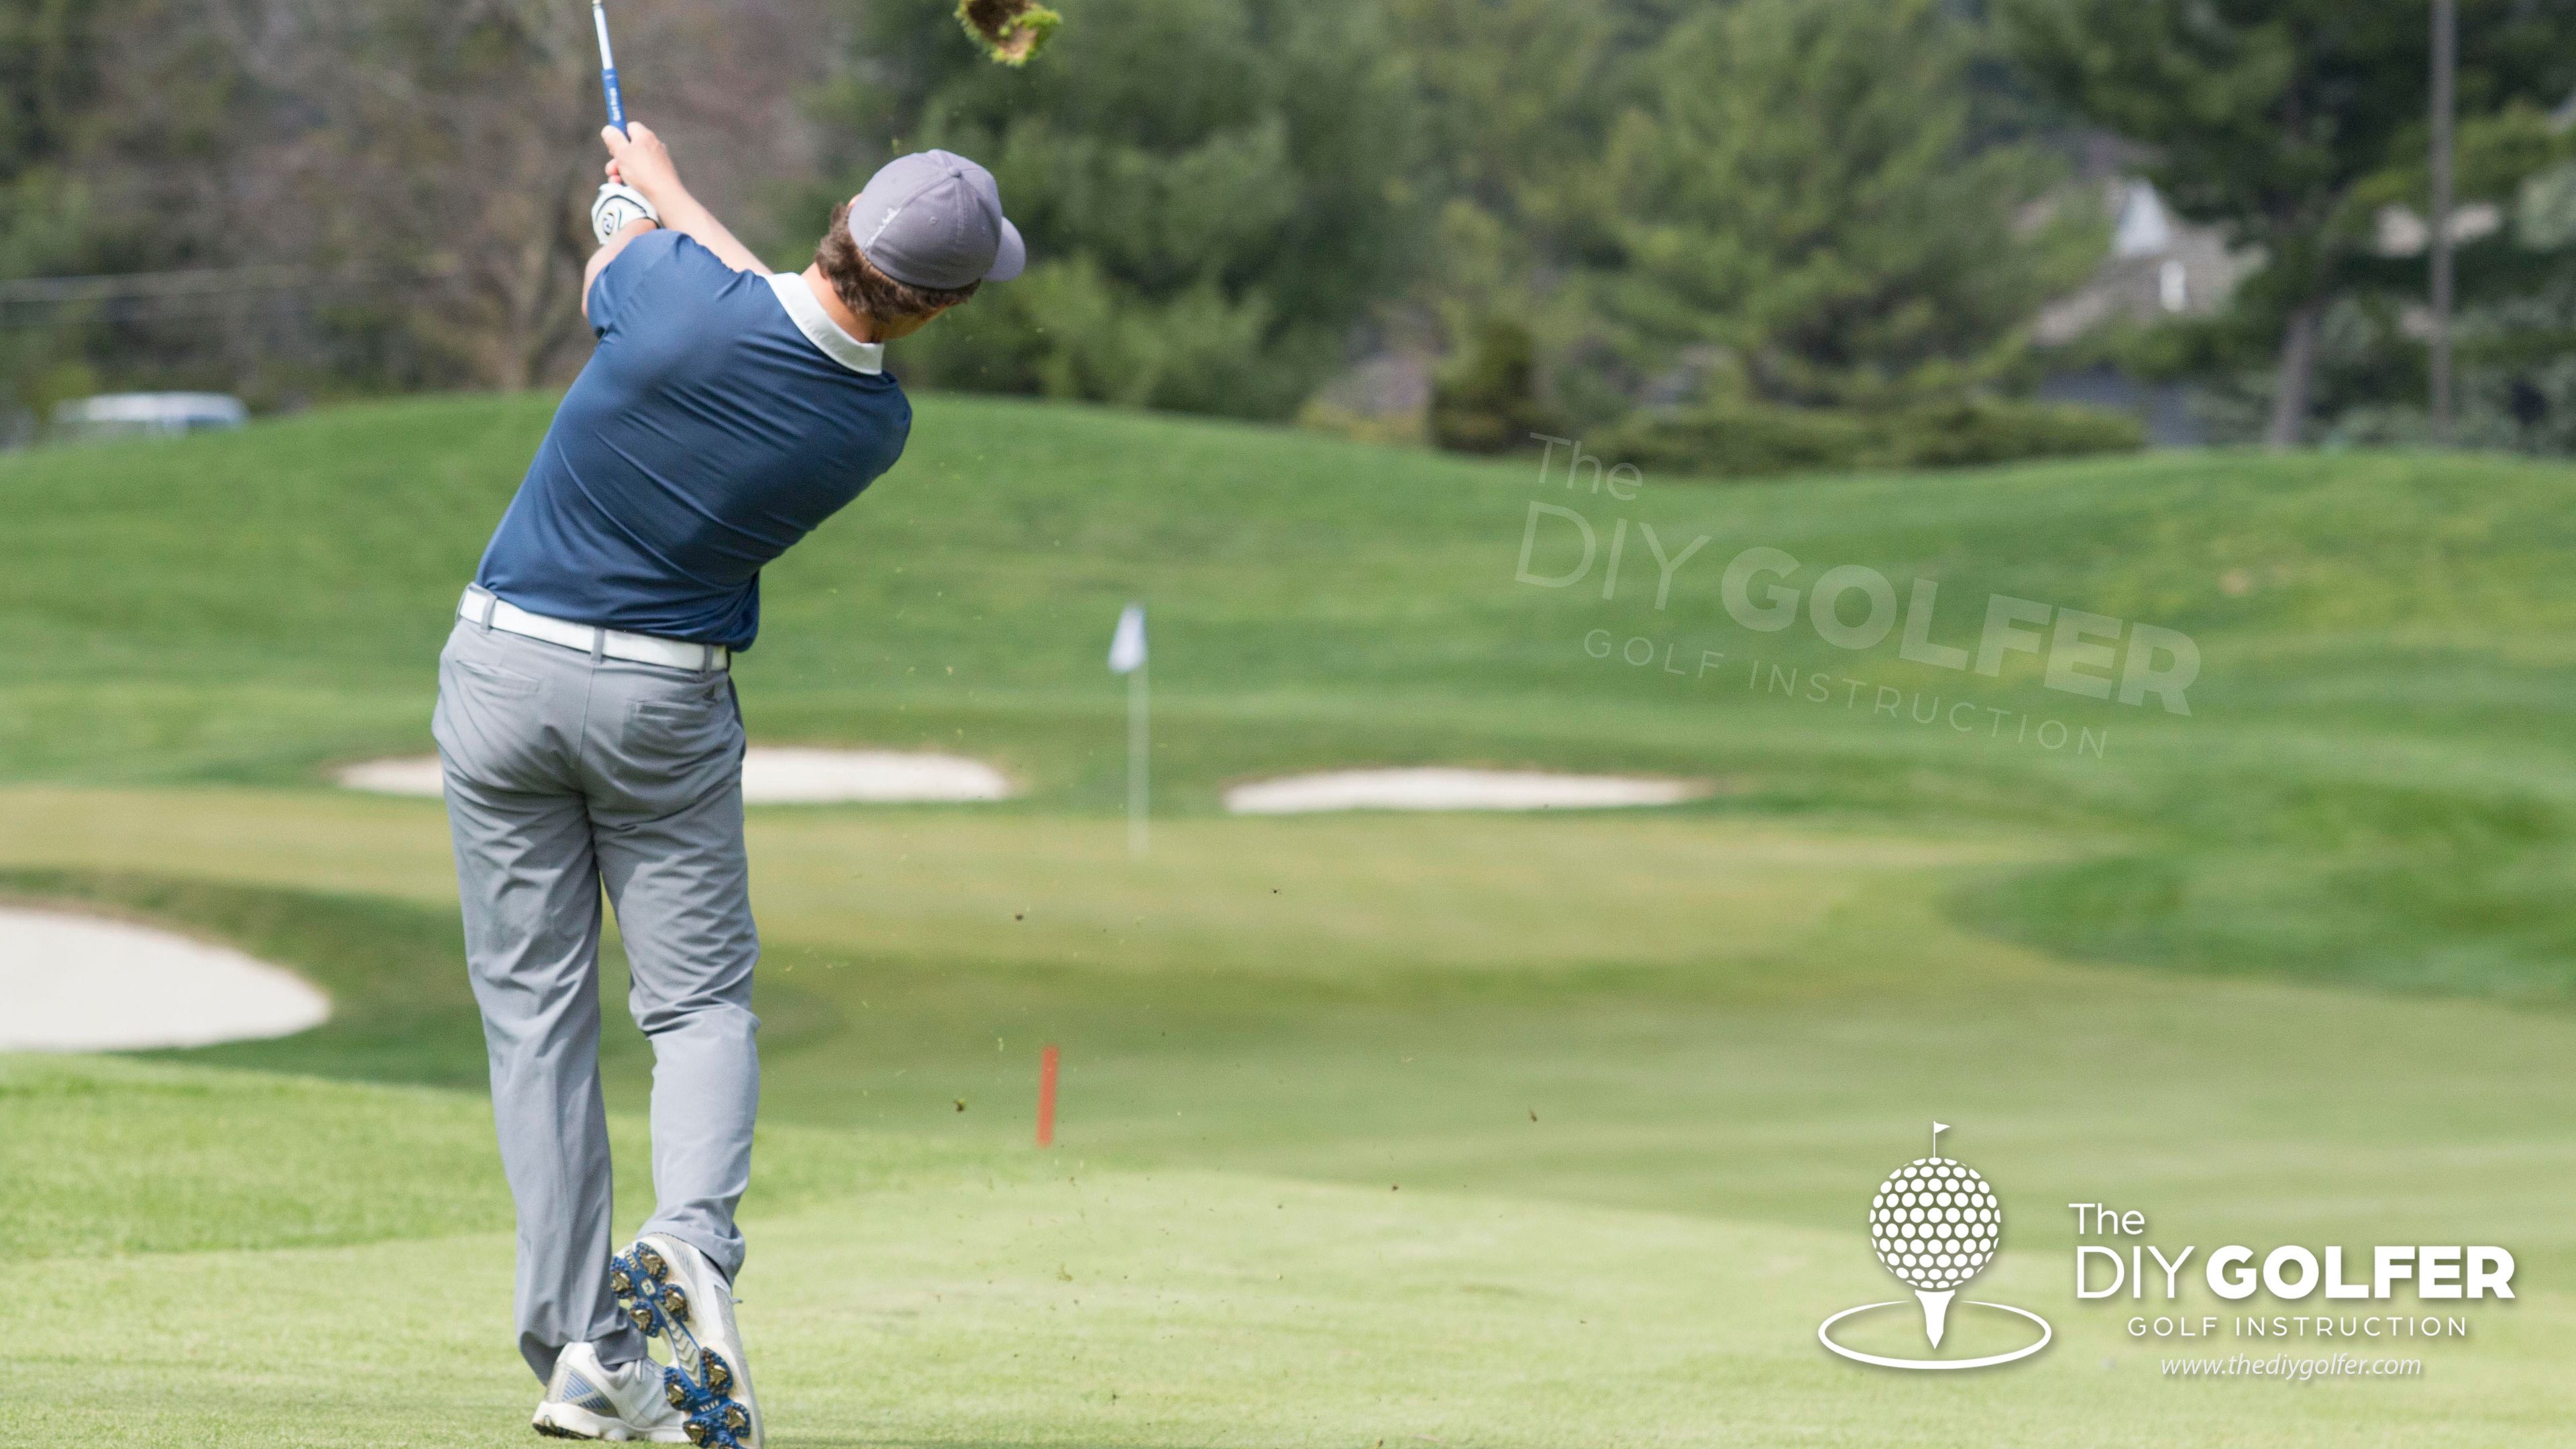 High Definition Golf Swing Photo: Follow Through with Divot